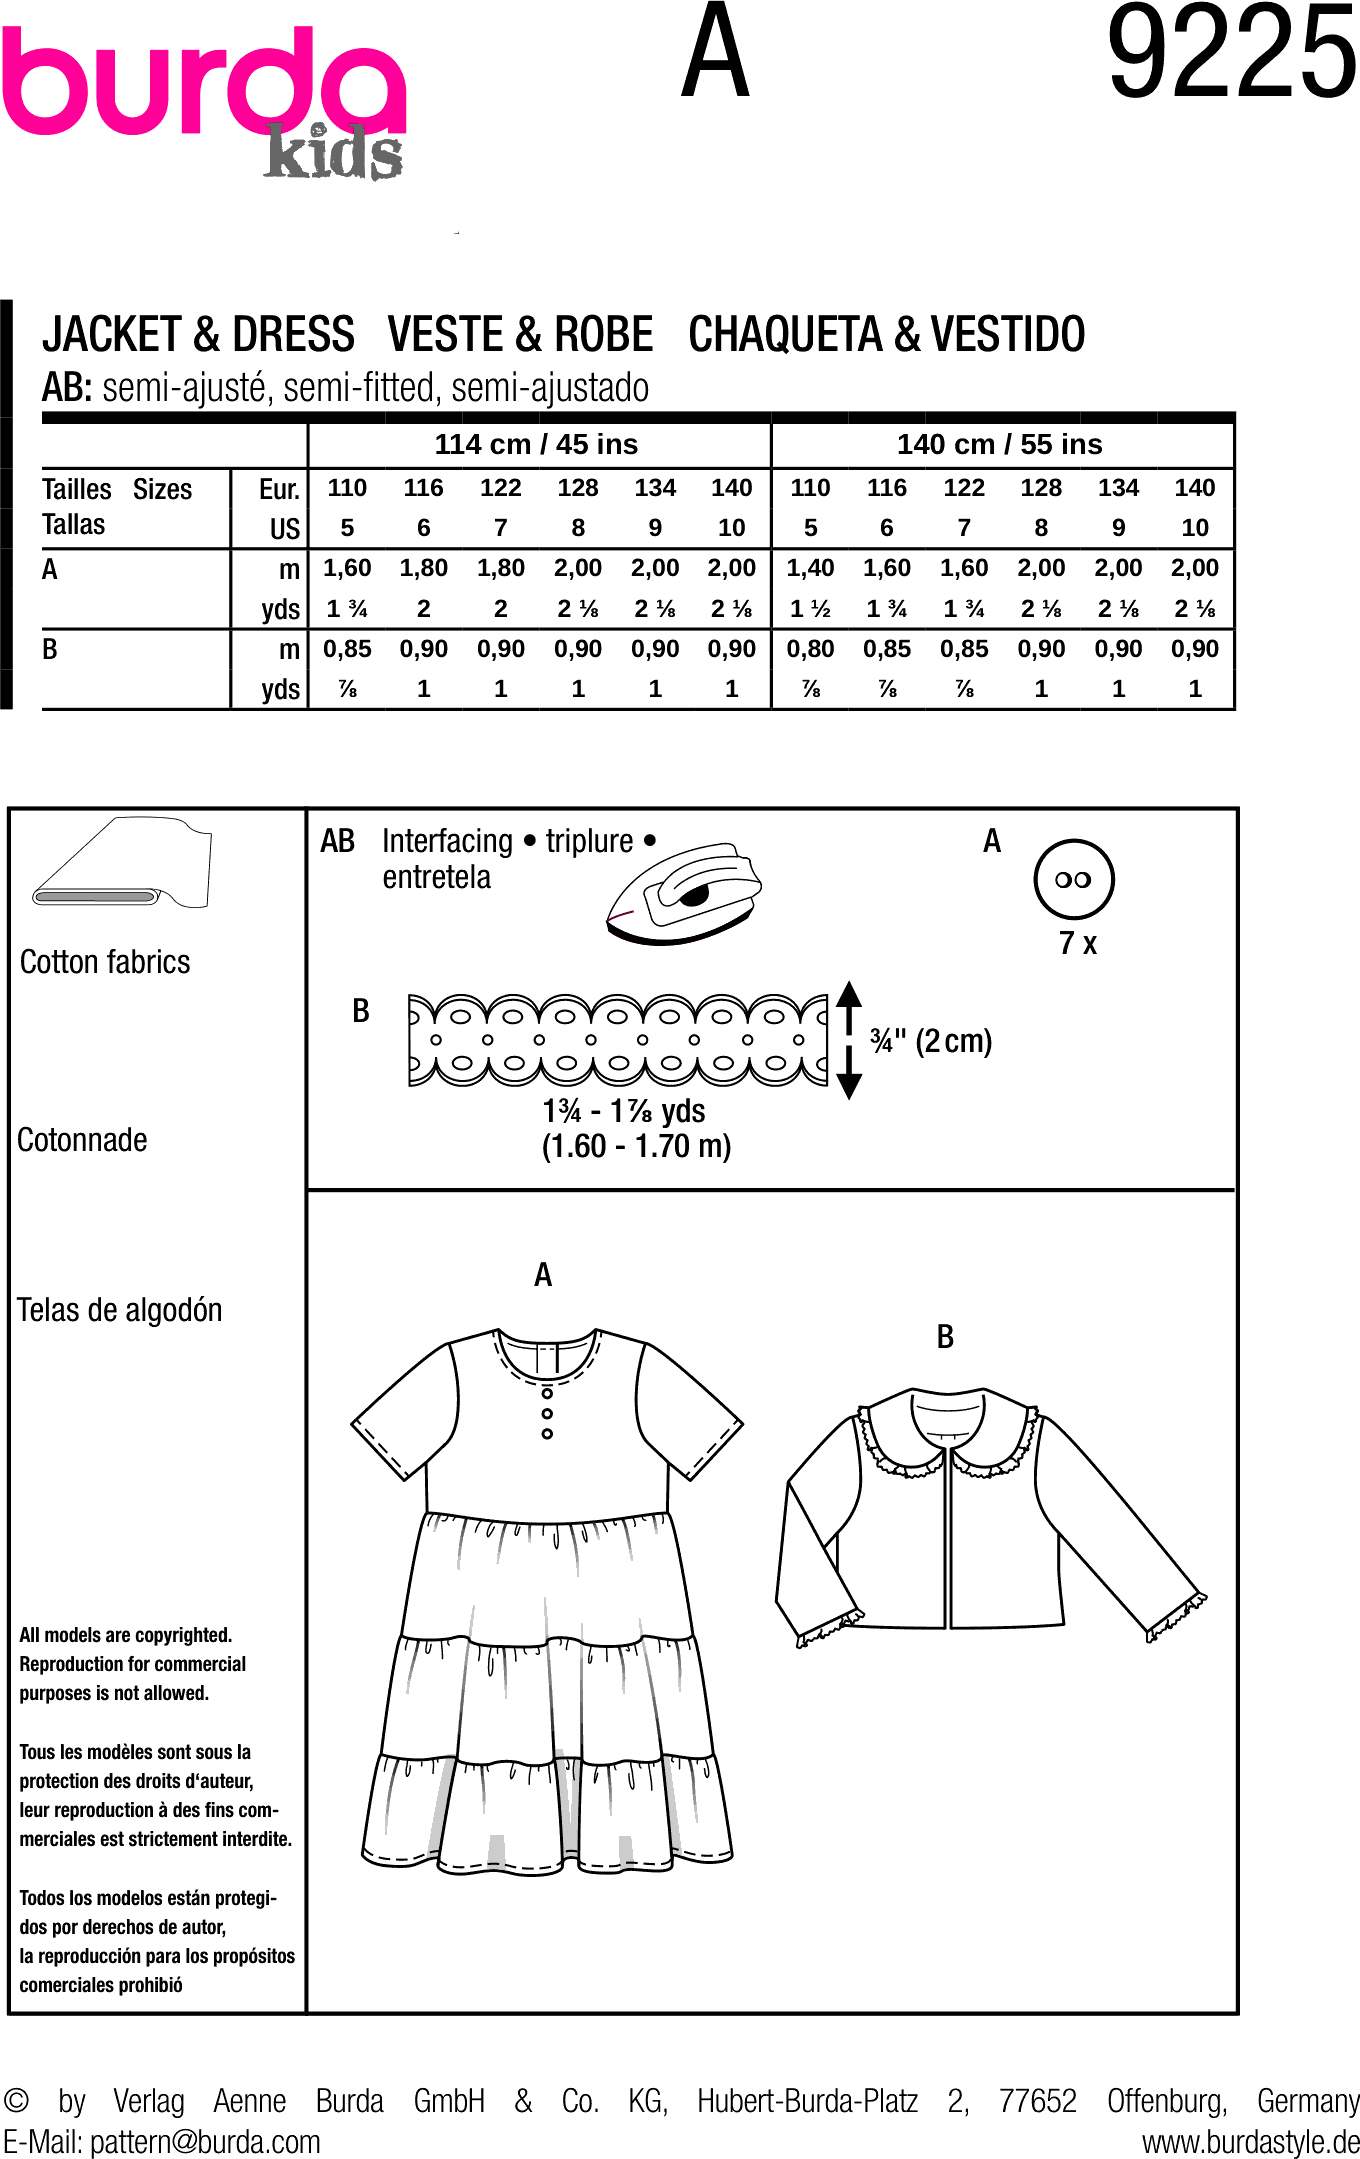 Burda Style Pattern 9225 Childrens Jacket and Dress B9225 Fabric Quantity Requirements From Patternsandplains.com